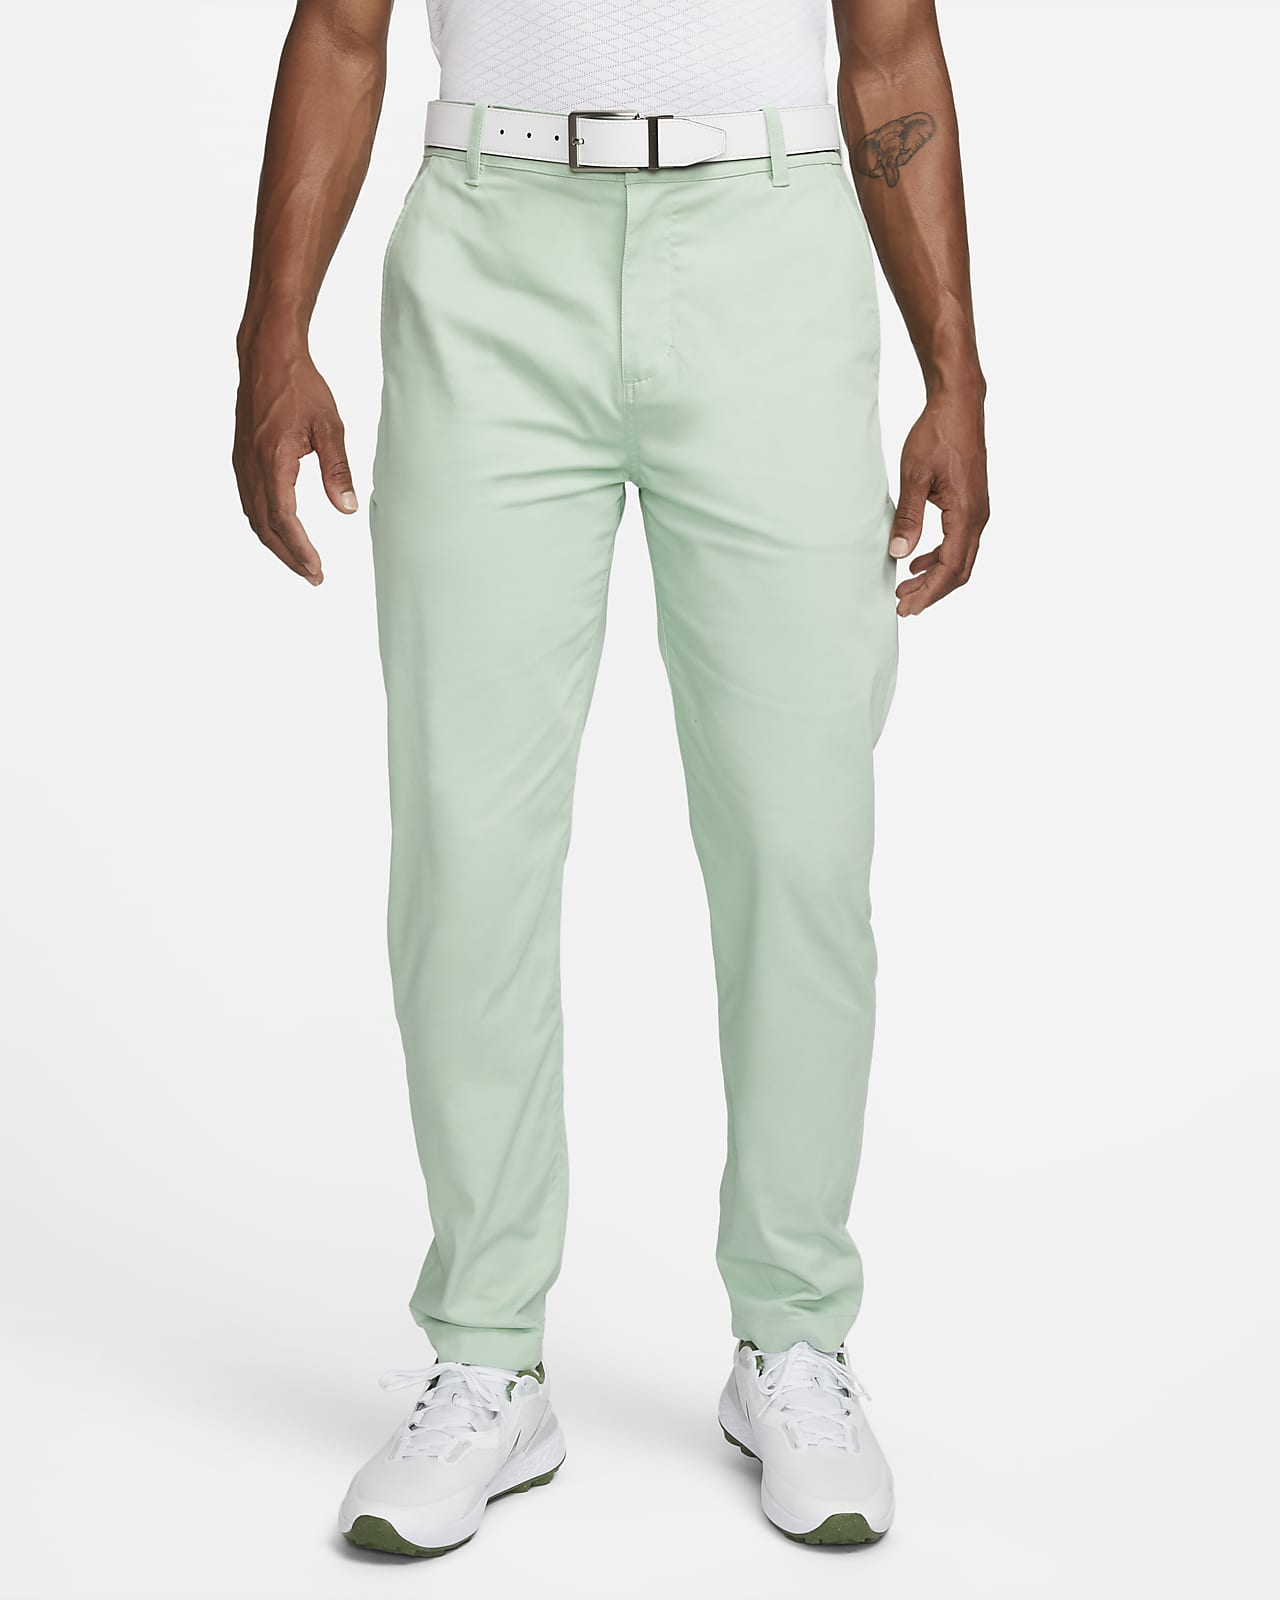 Nike Dri-Fit UV Chino Pants for Sale